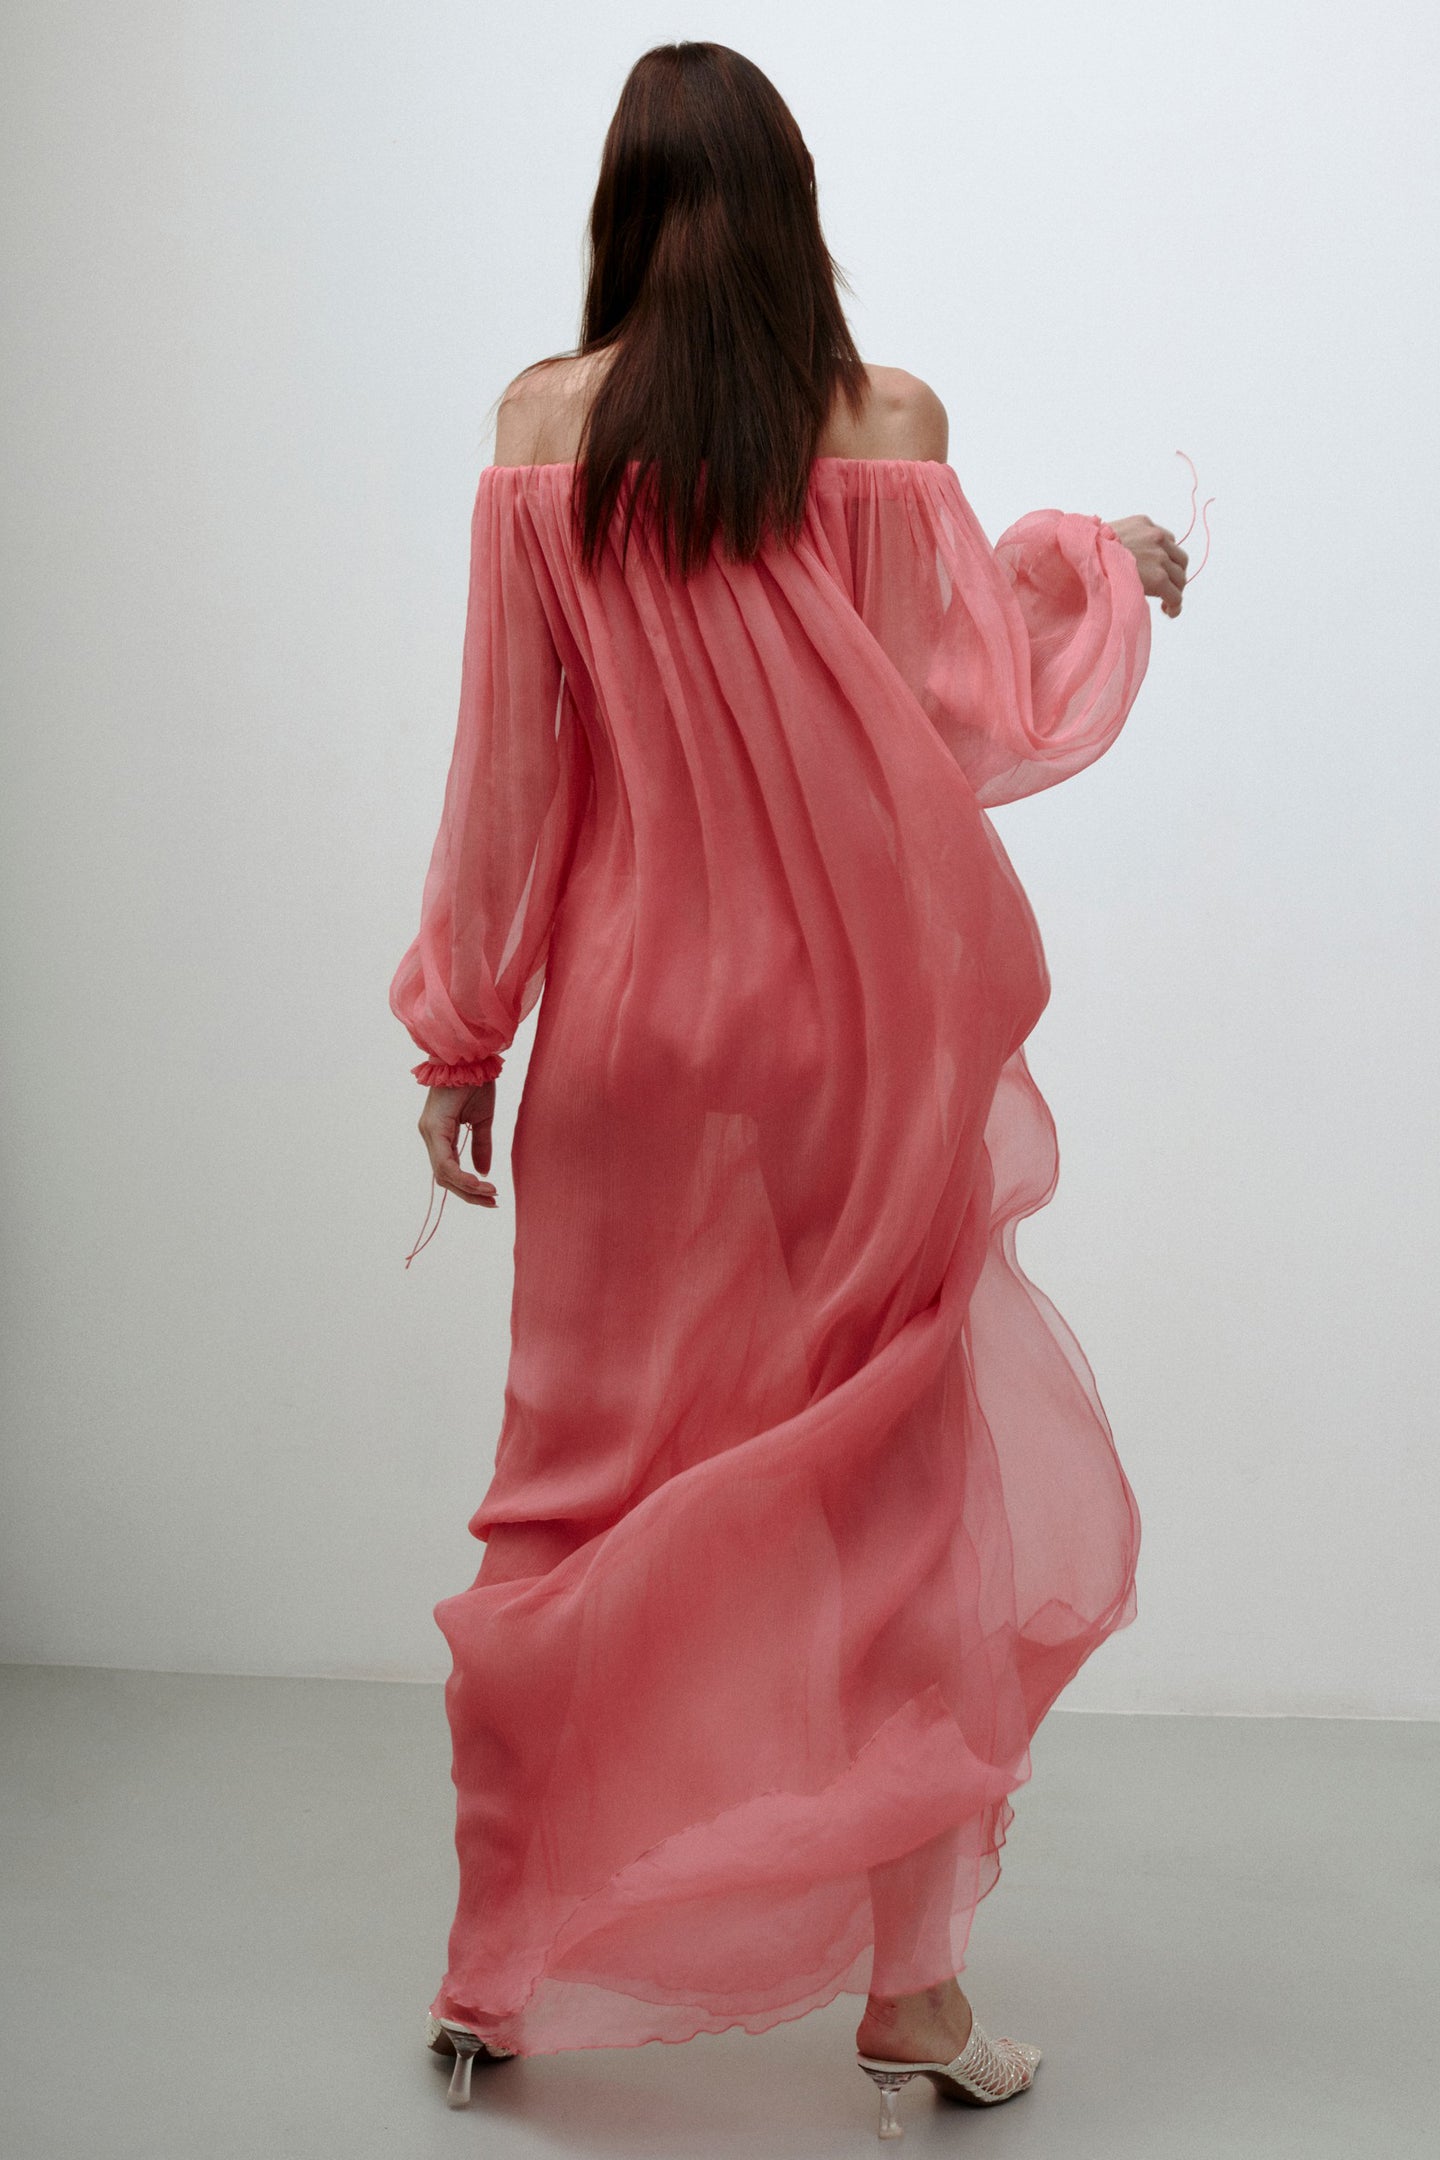 Model in pink Milani dress